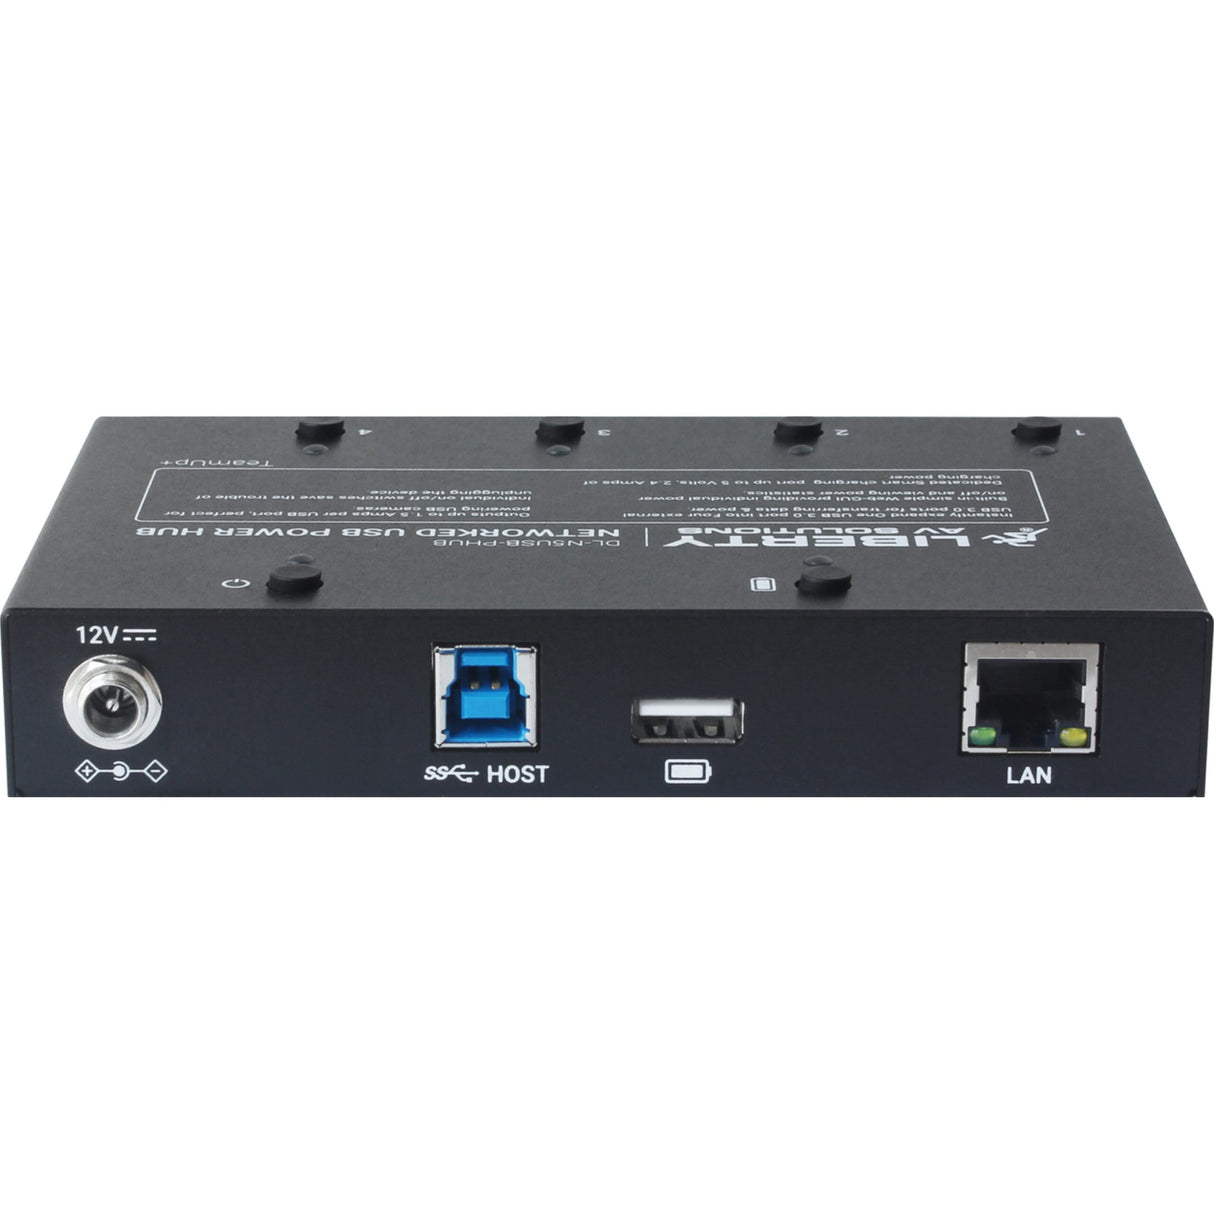 DigitaLinx DL-N5USB-PHUB TeamUp+ Series 4 +1 Port Powered USB3.0 Hub with Control